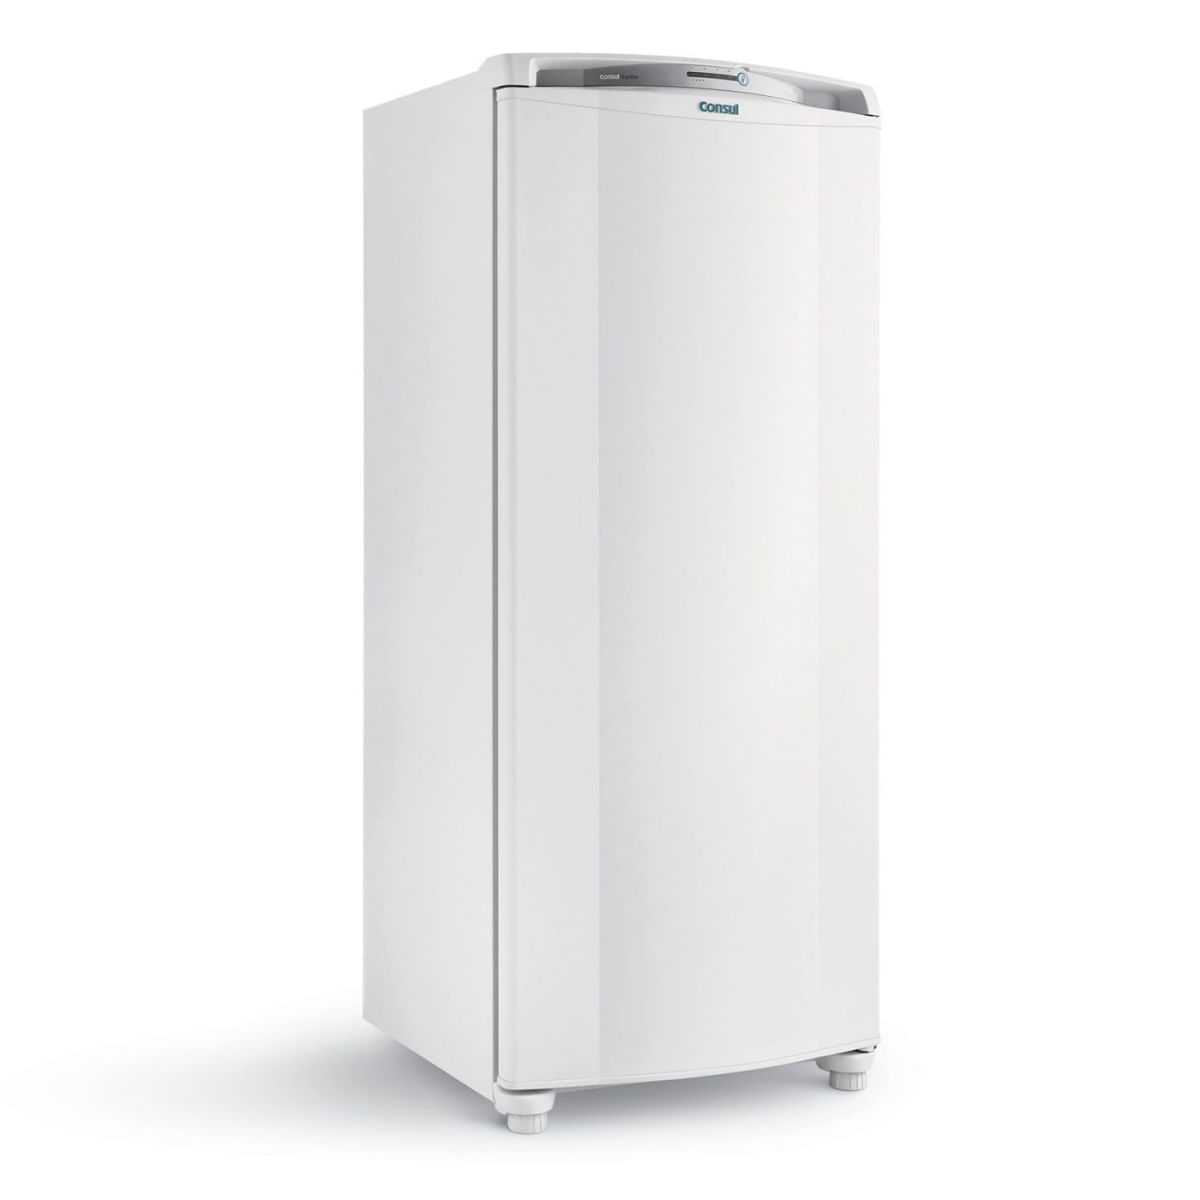 Refrigerador Consul Frost Free 300 Litros Branco CRB36AB - 127 Volts 110